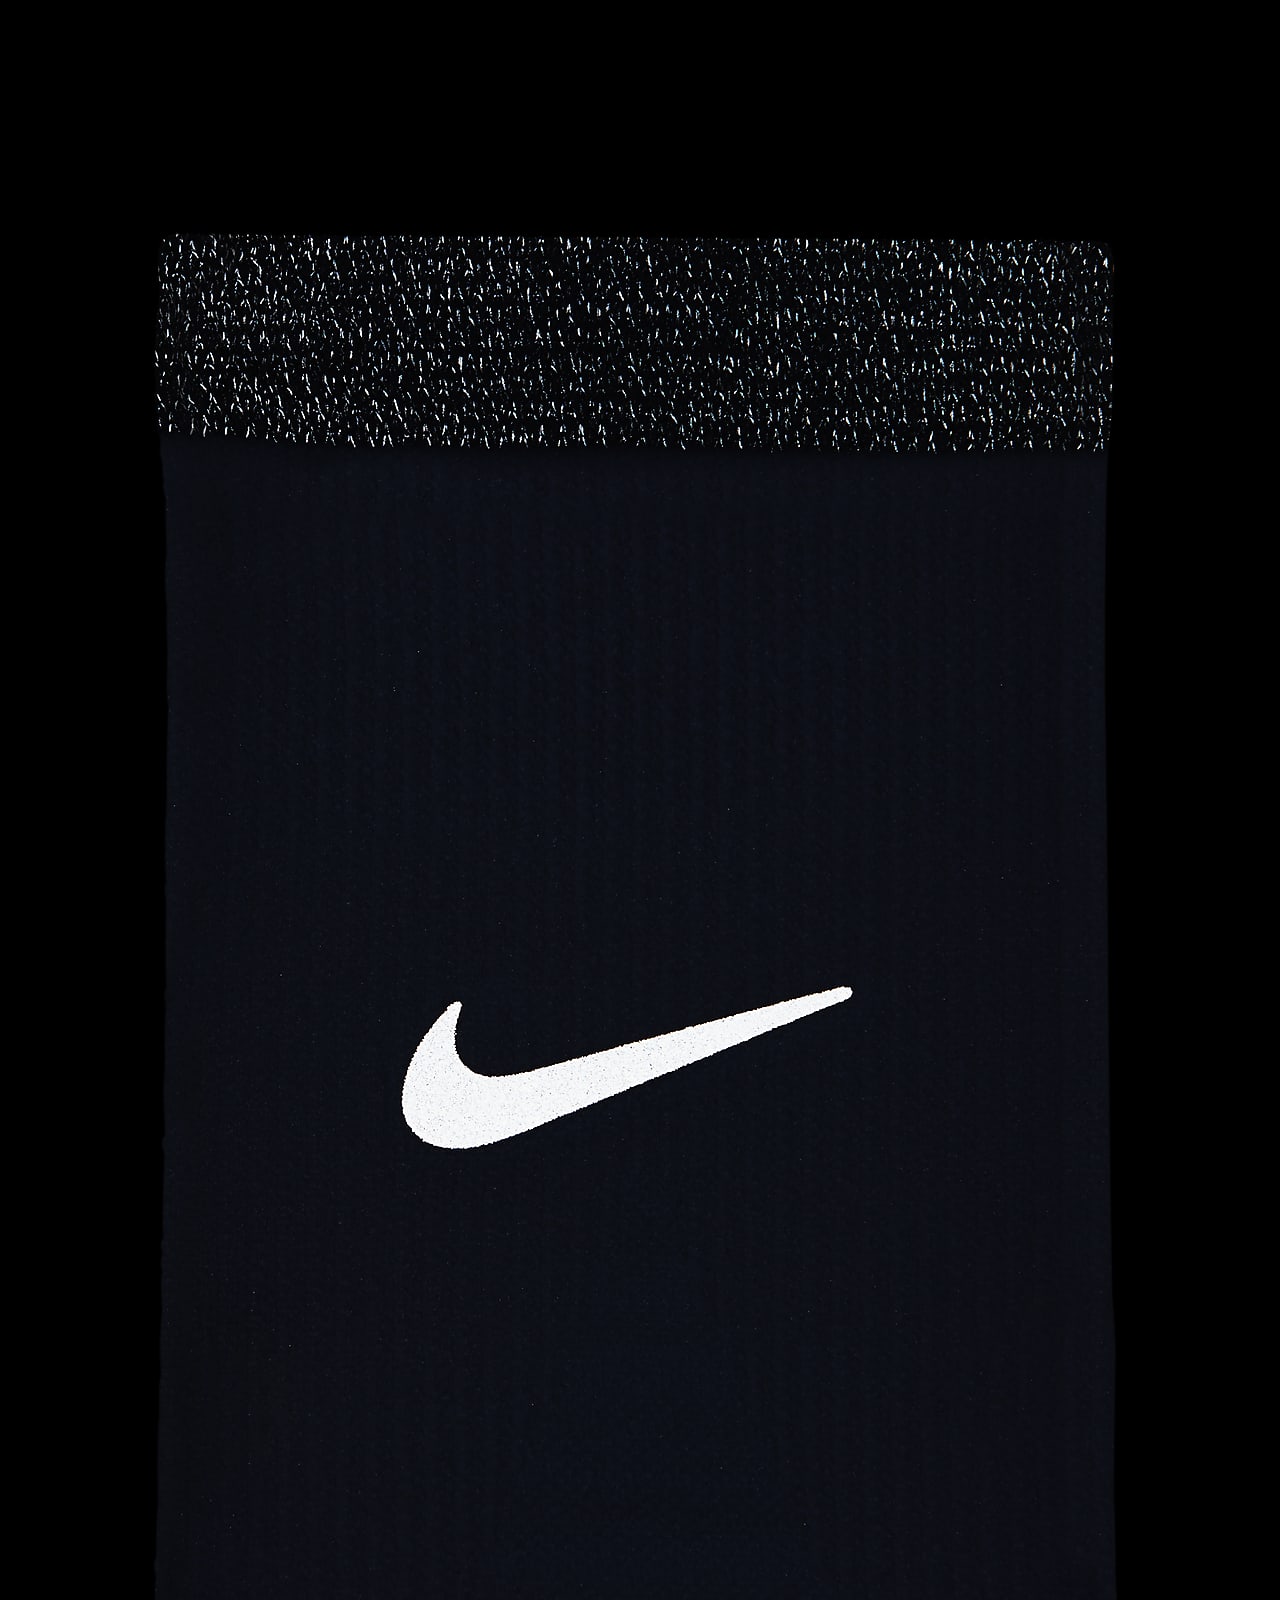 Chaussettes Nike Spark Lightweight Blanc Unisex